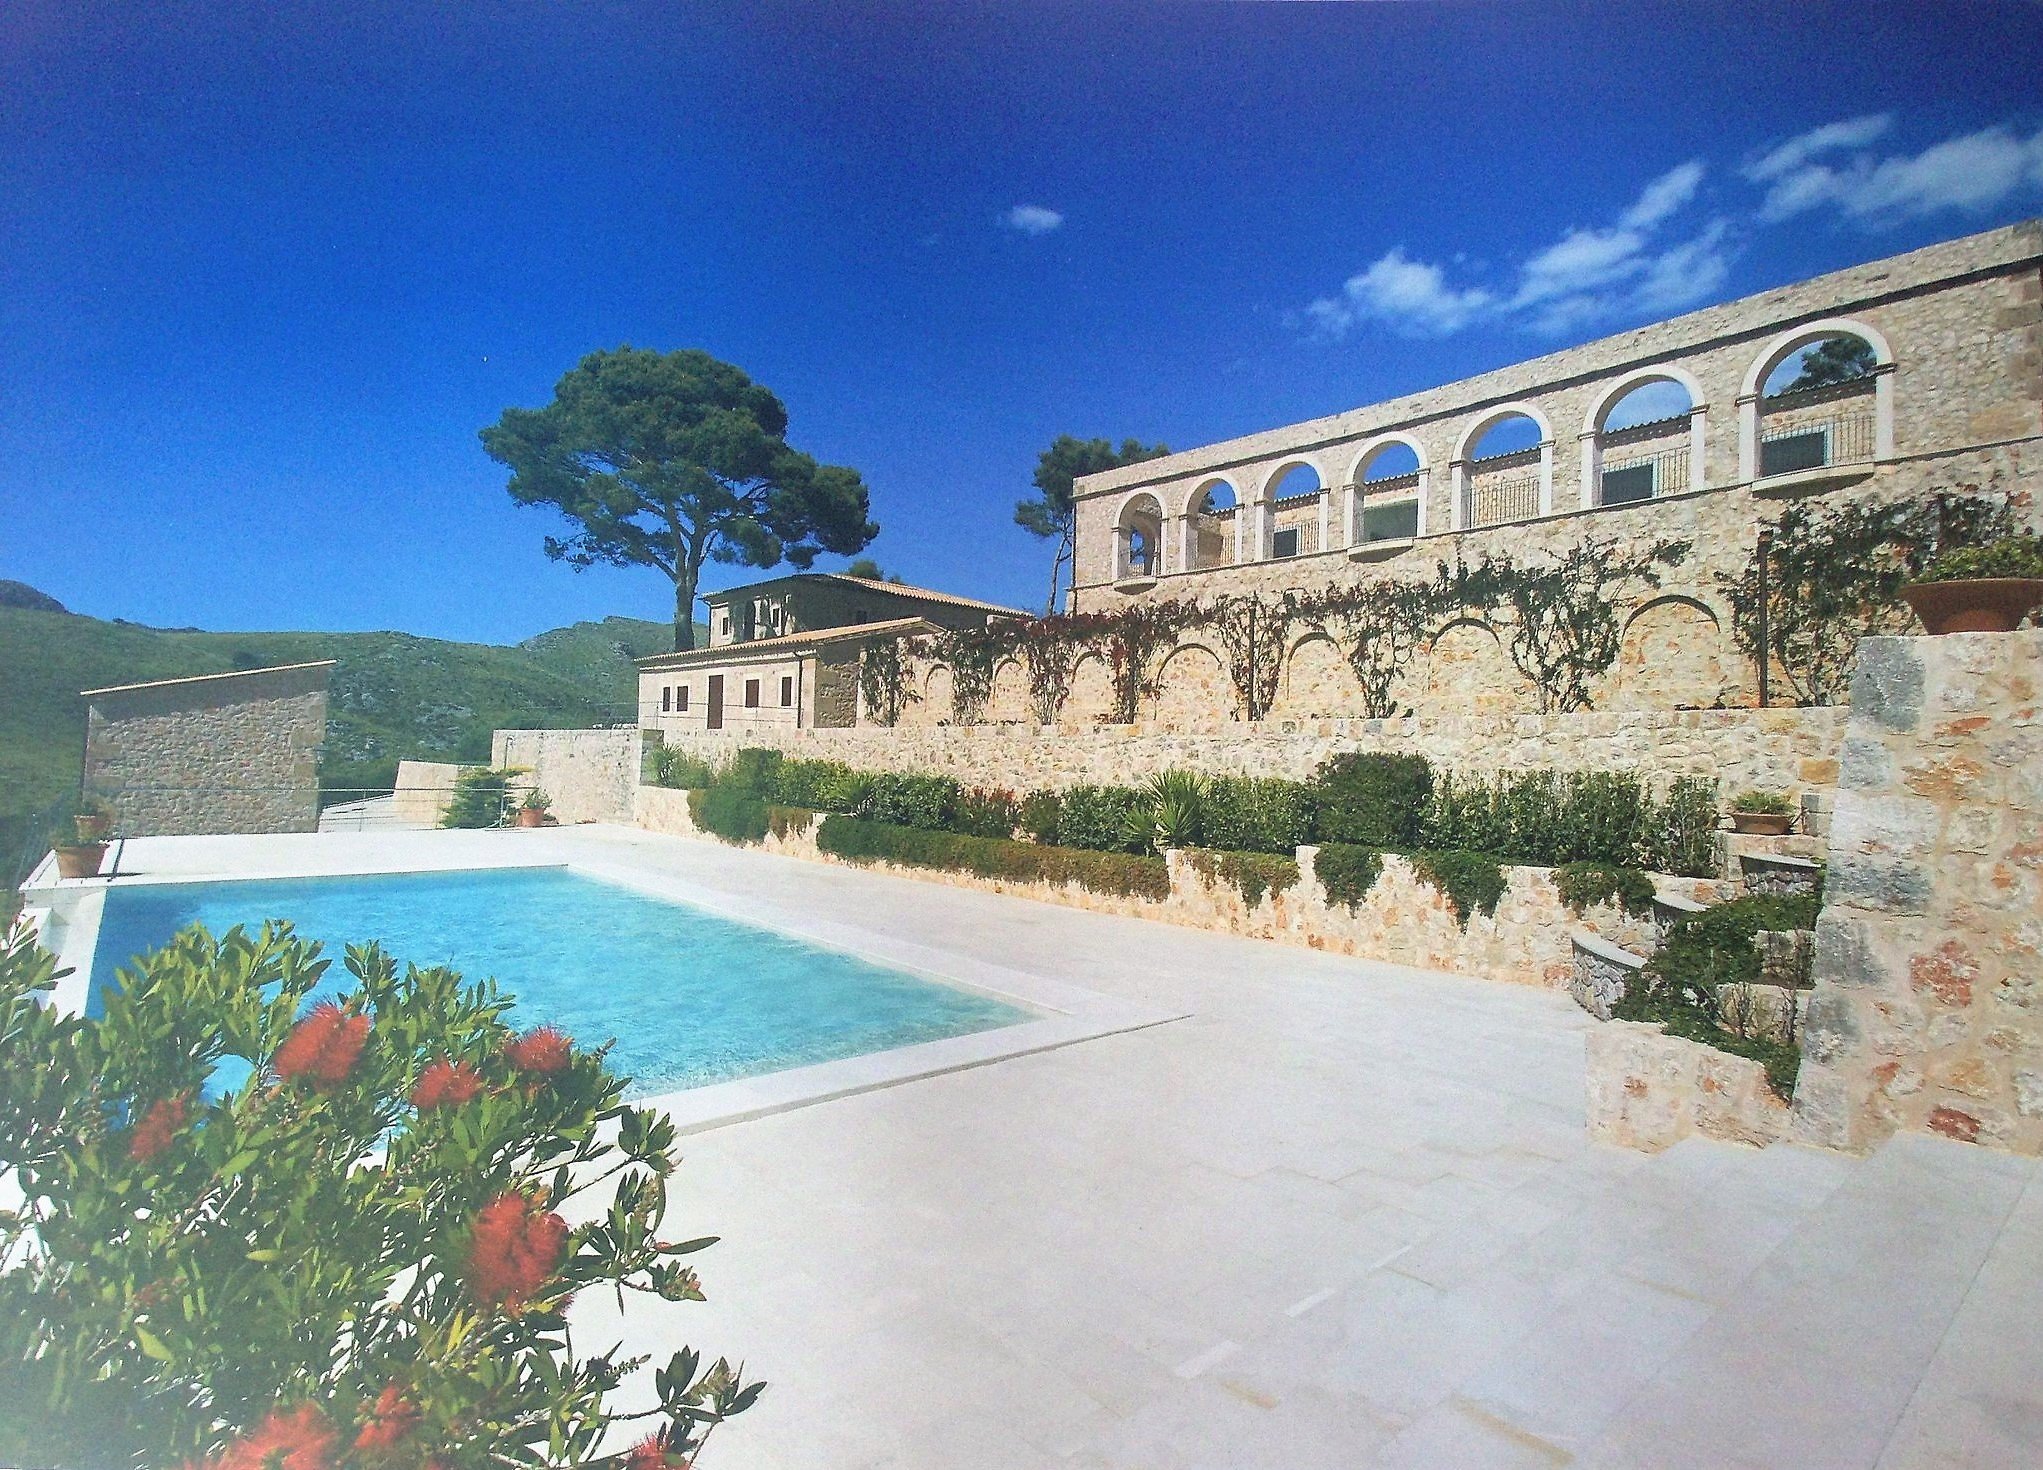 Edificación con piscina en la finca Sa Fortalesa, en Pollensa, Mallorca. | Imagen: Flickr